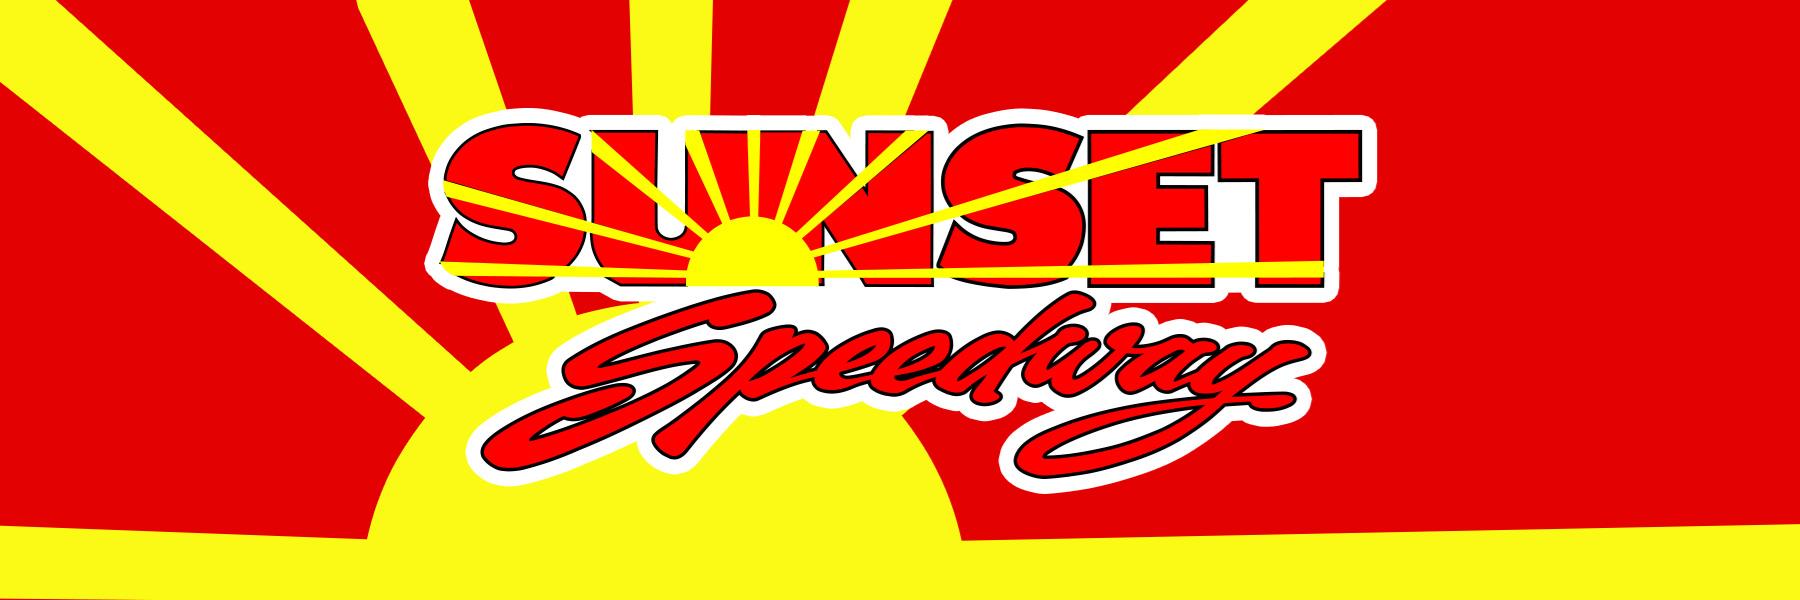 Sunset Speedway